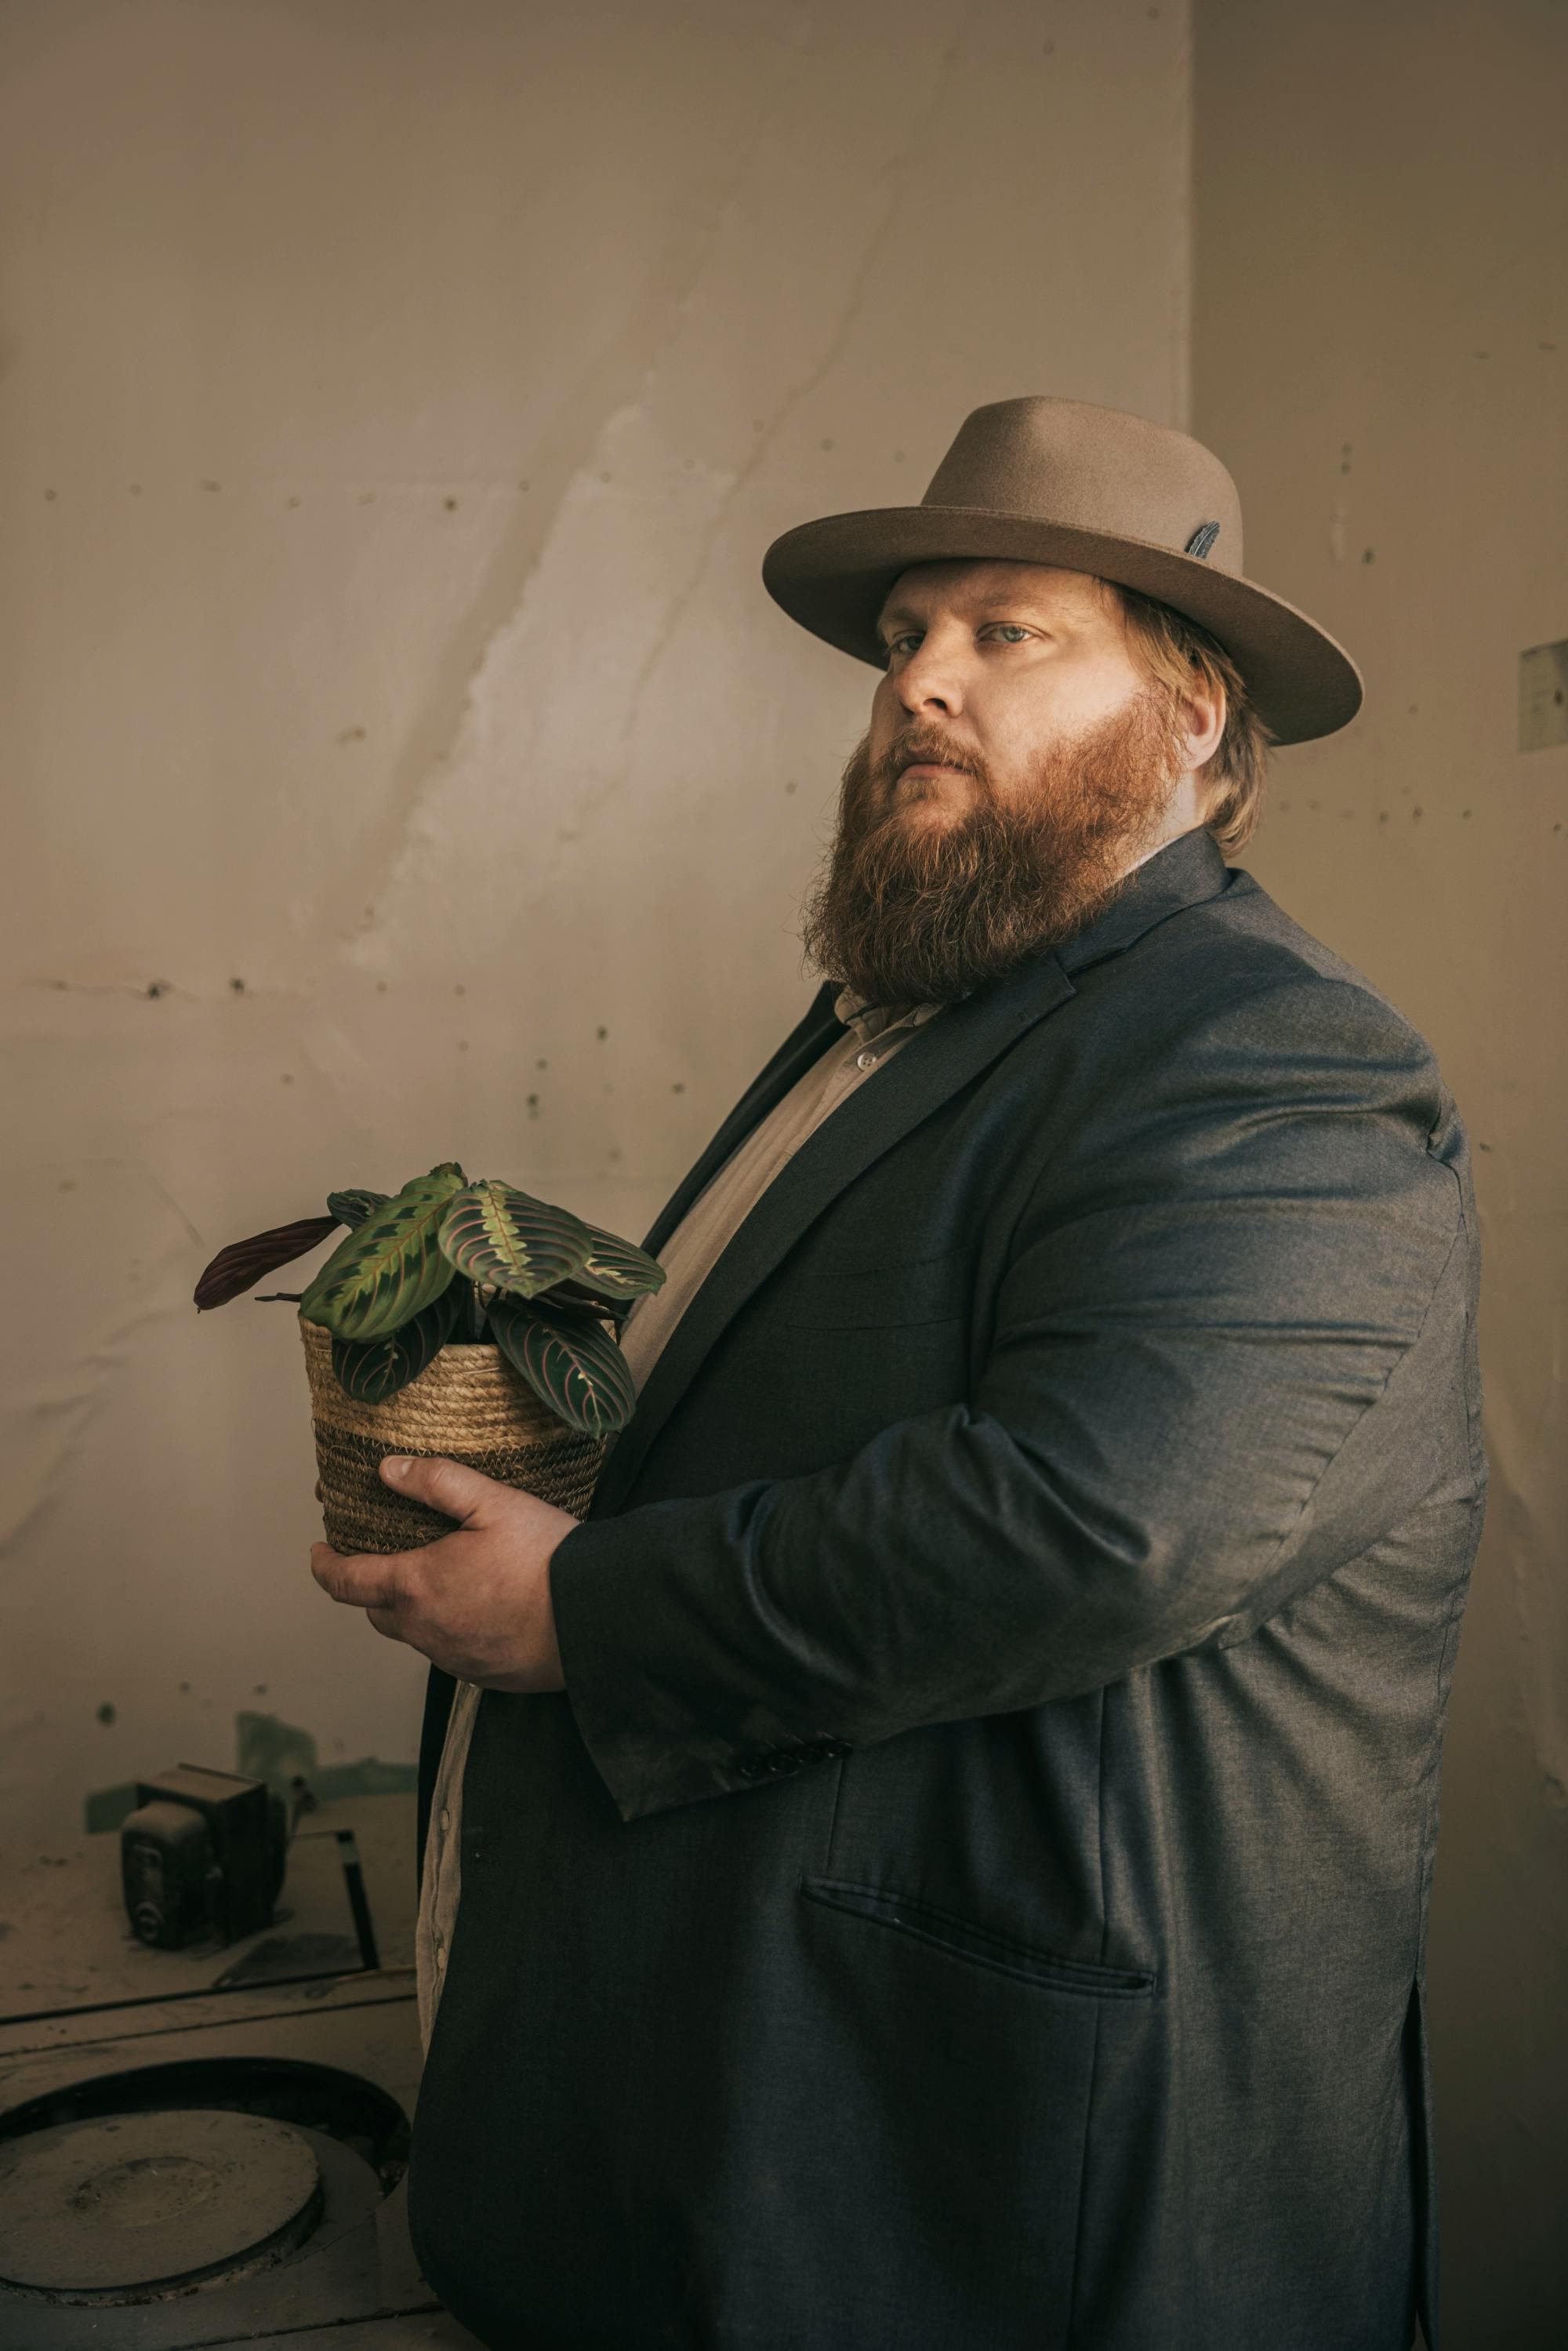 Icelandic singer Valdimar of Lón holding a plant